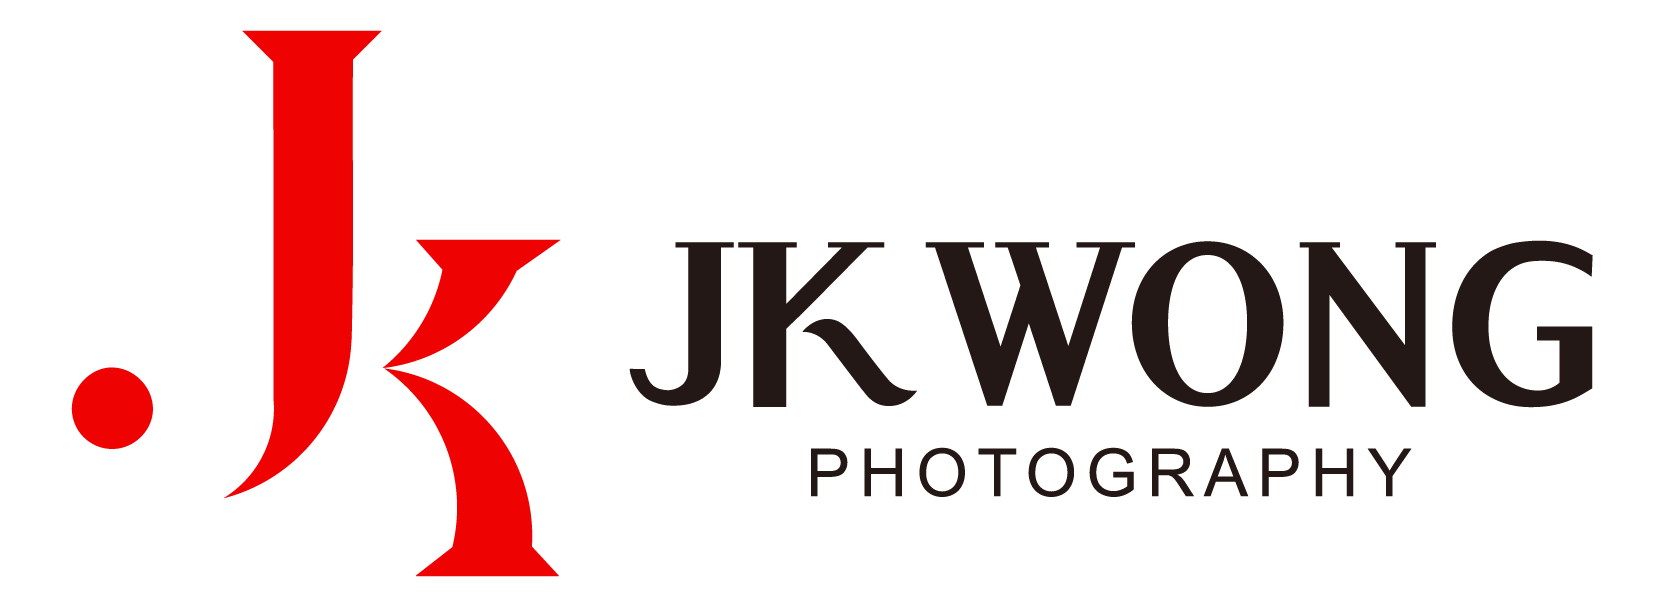 JKWONG PHOTOGRAPHY